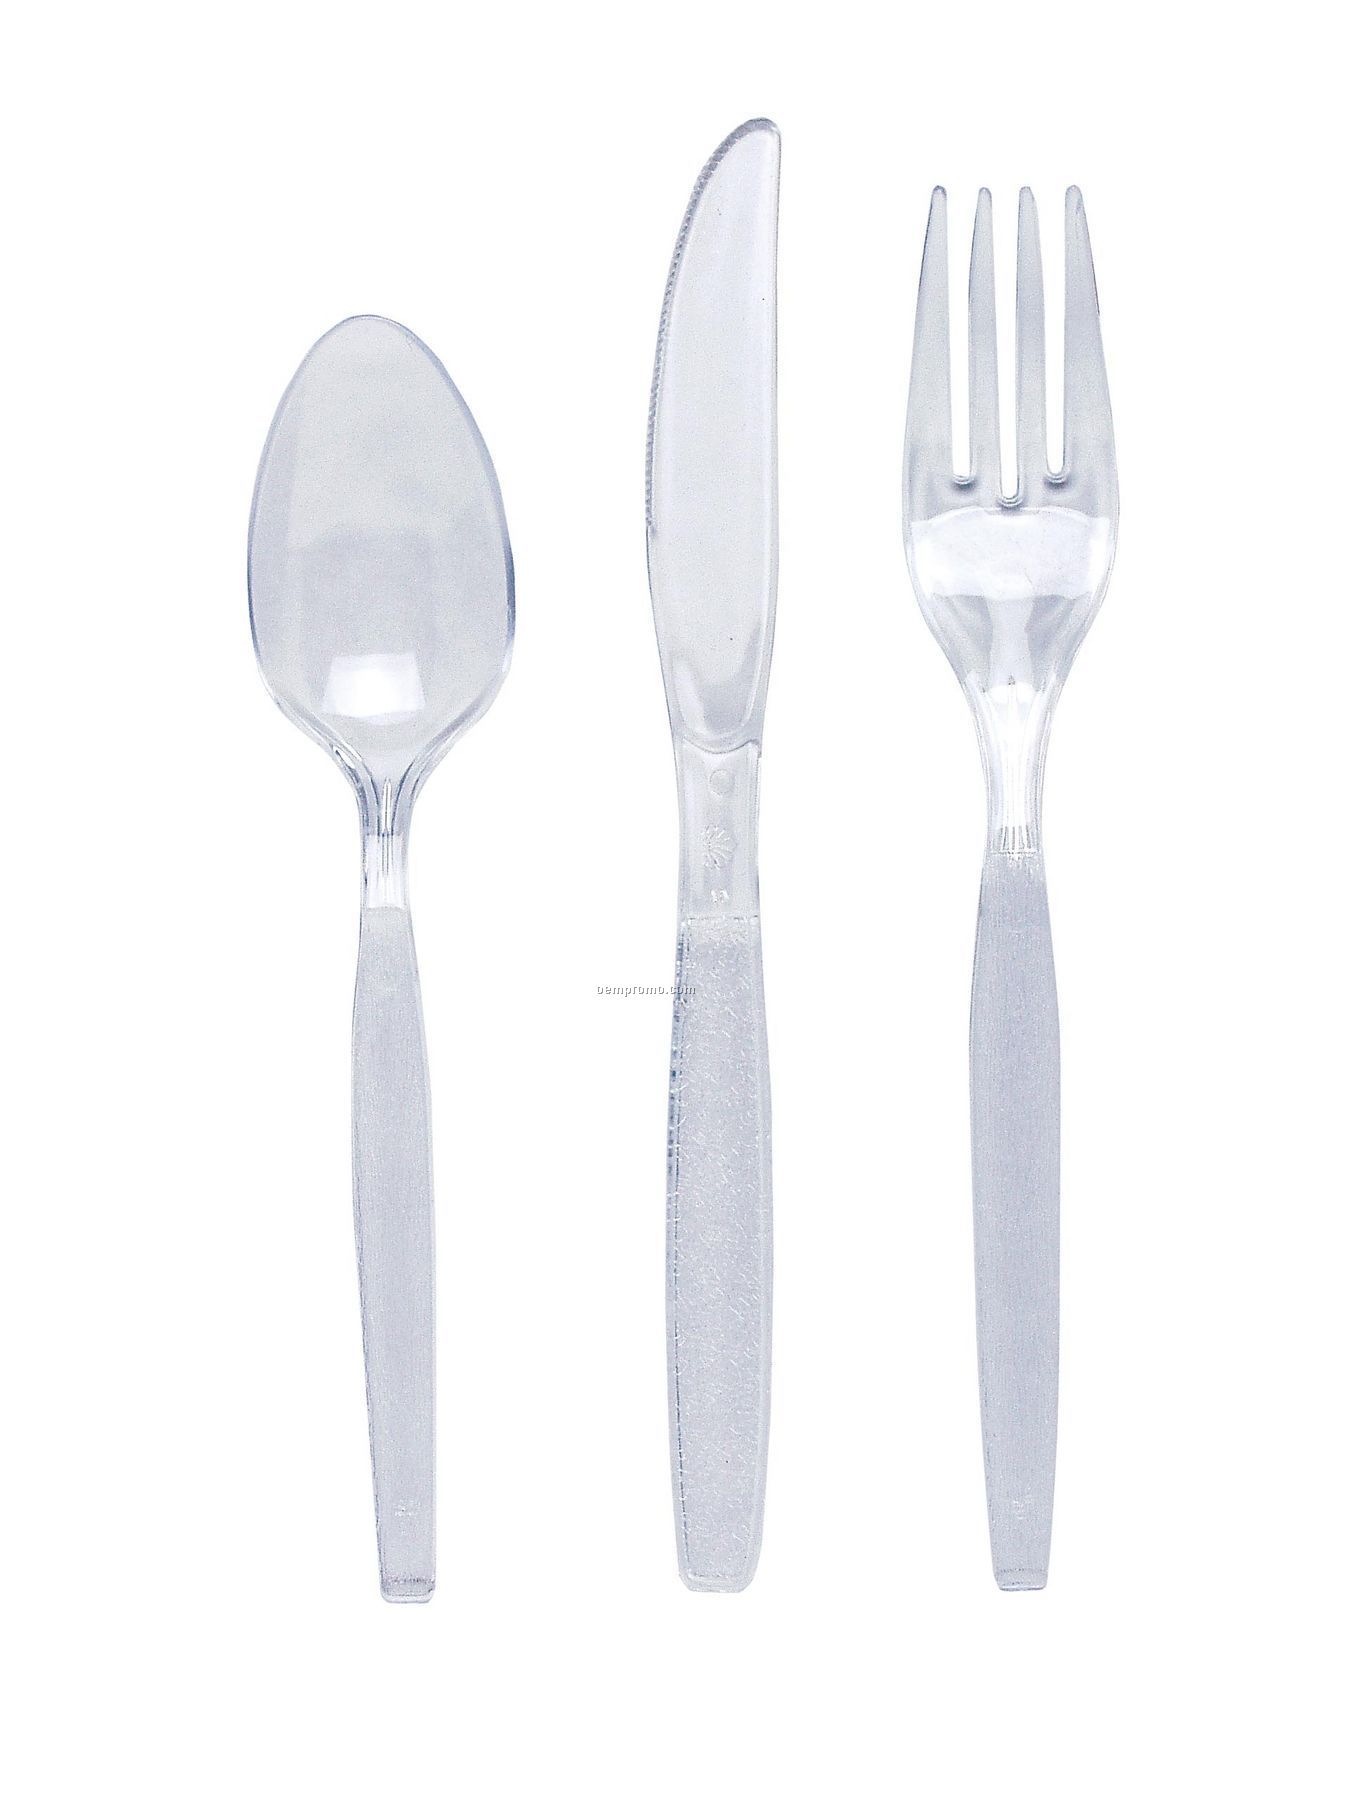 White Plastic Spoon - 5.75" Long